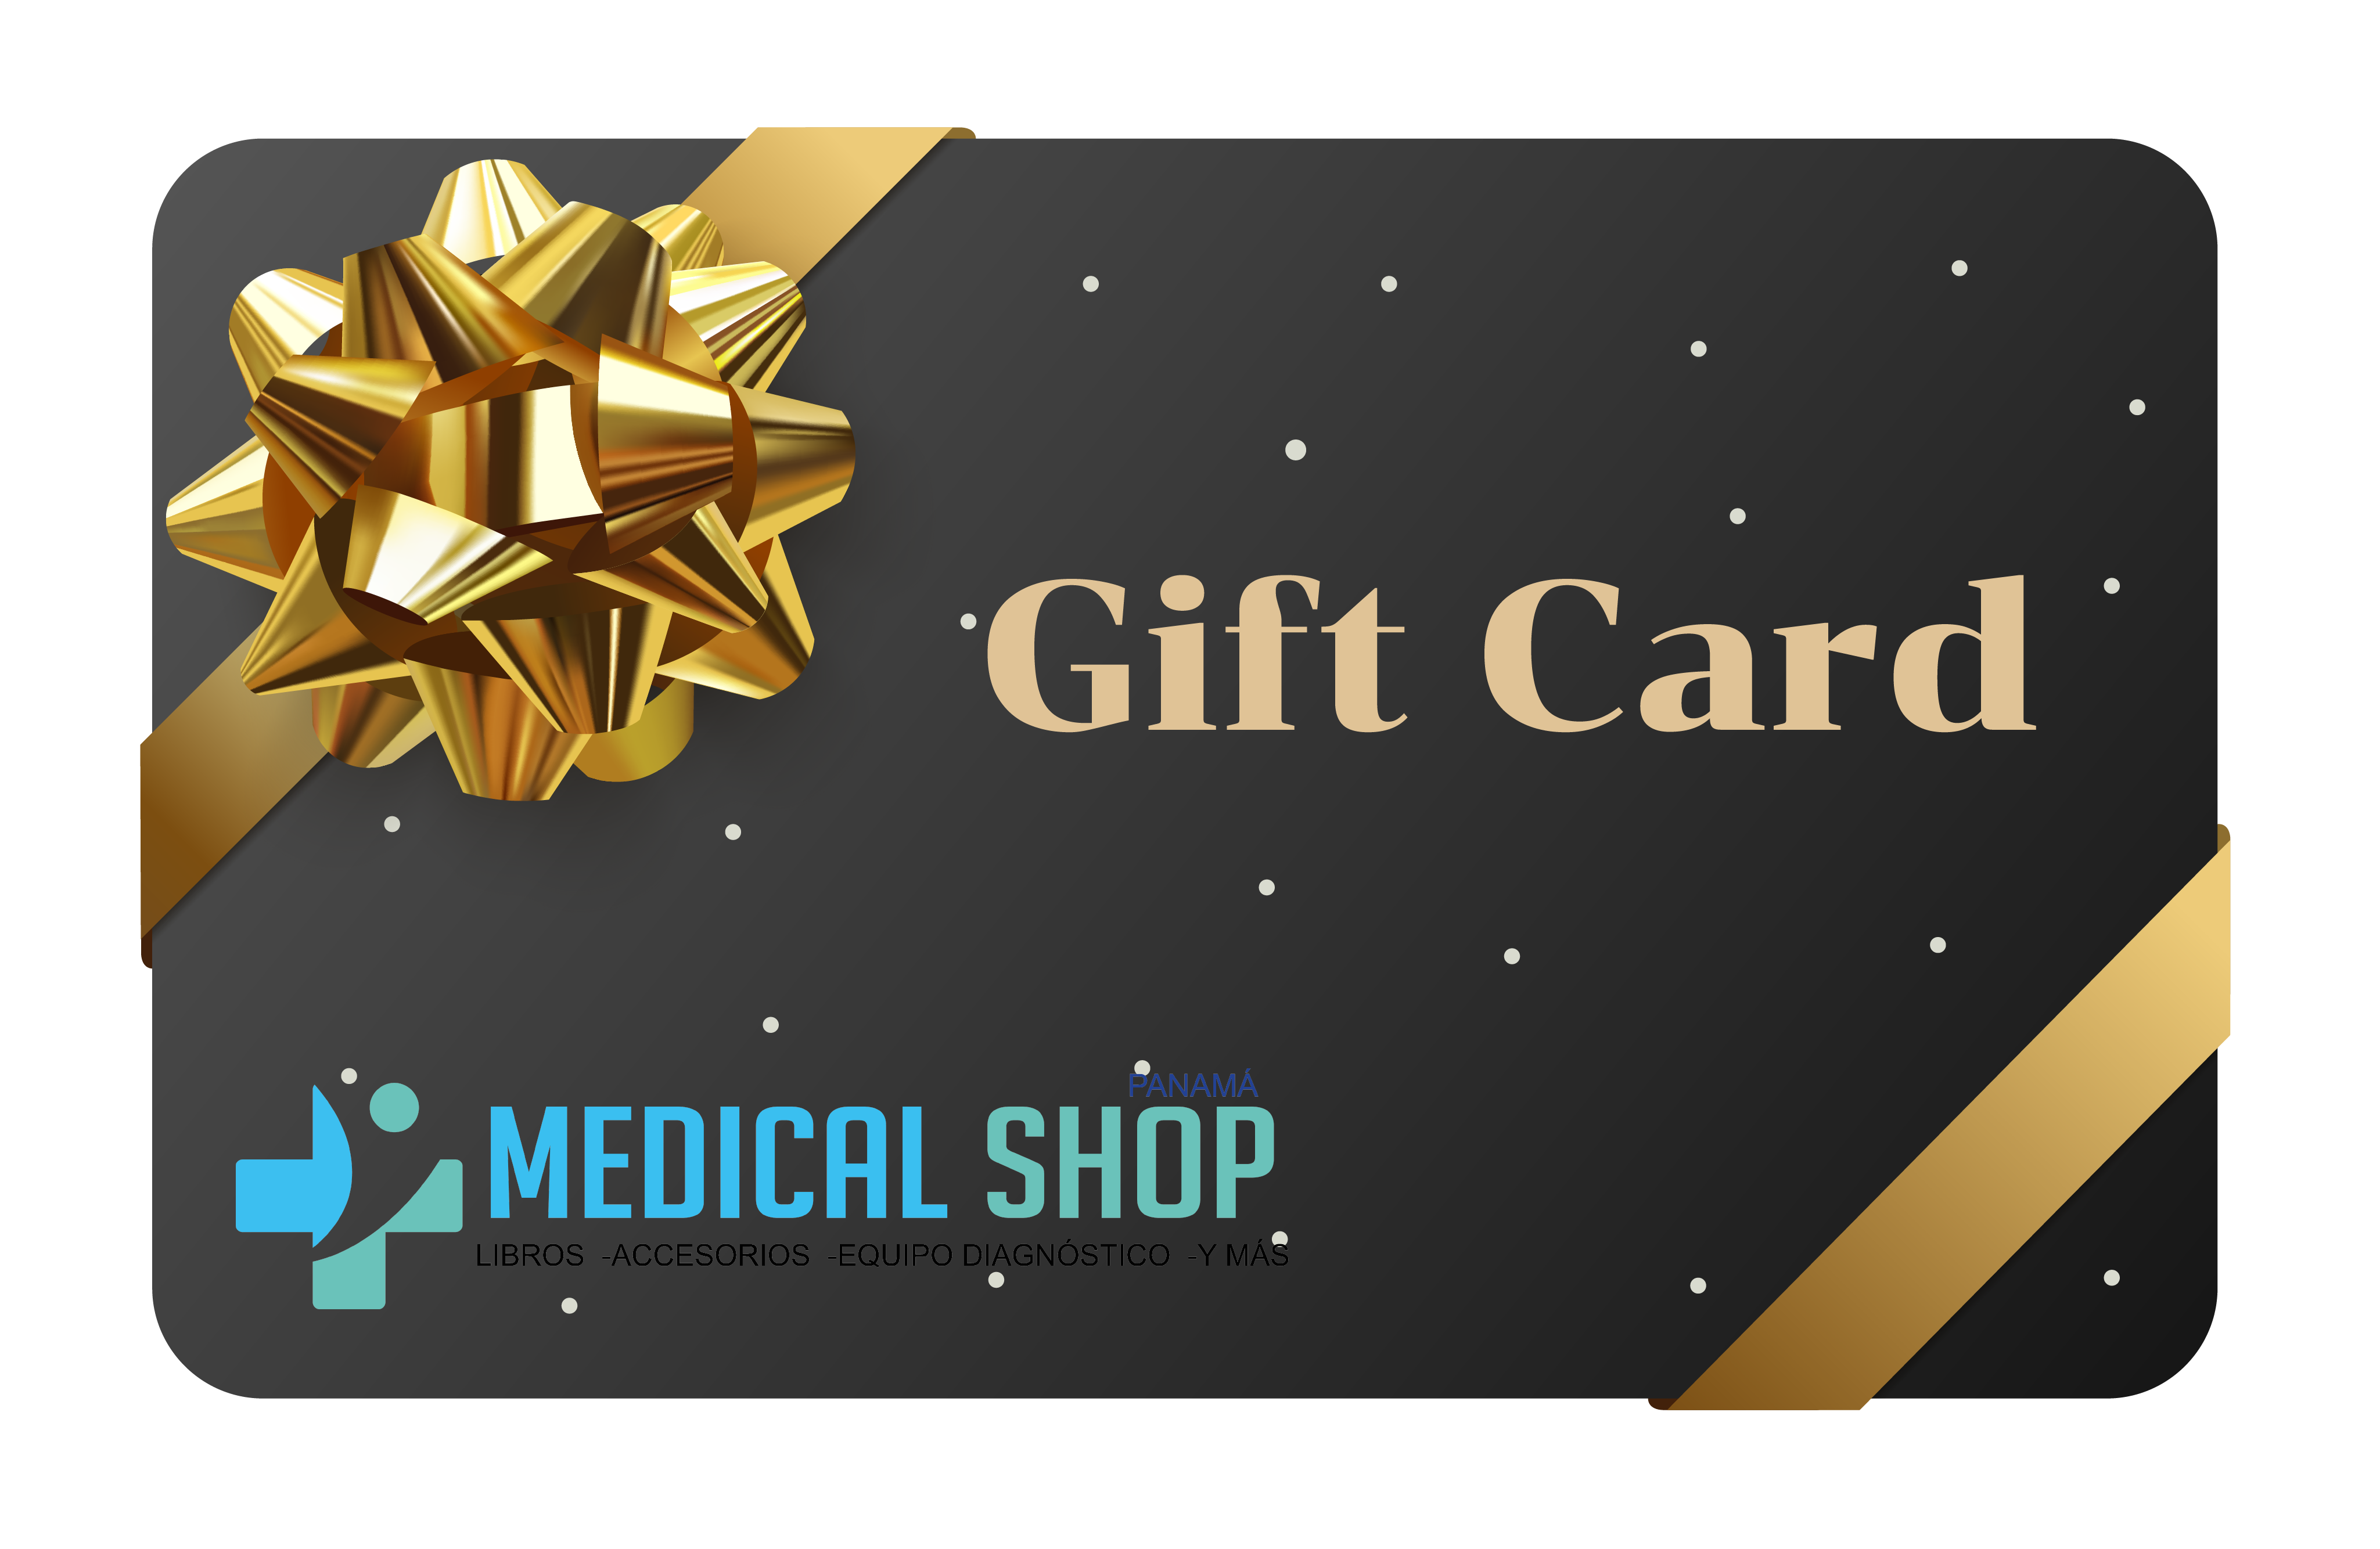 Tarjeta de regalo- Medical Shop Panamá